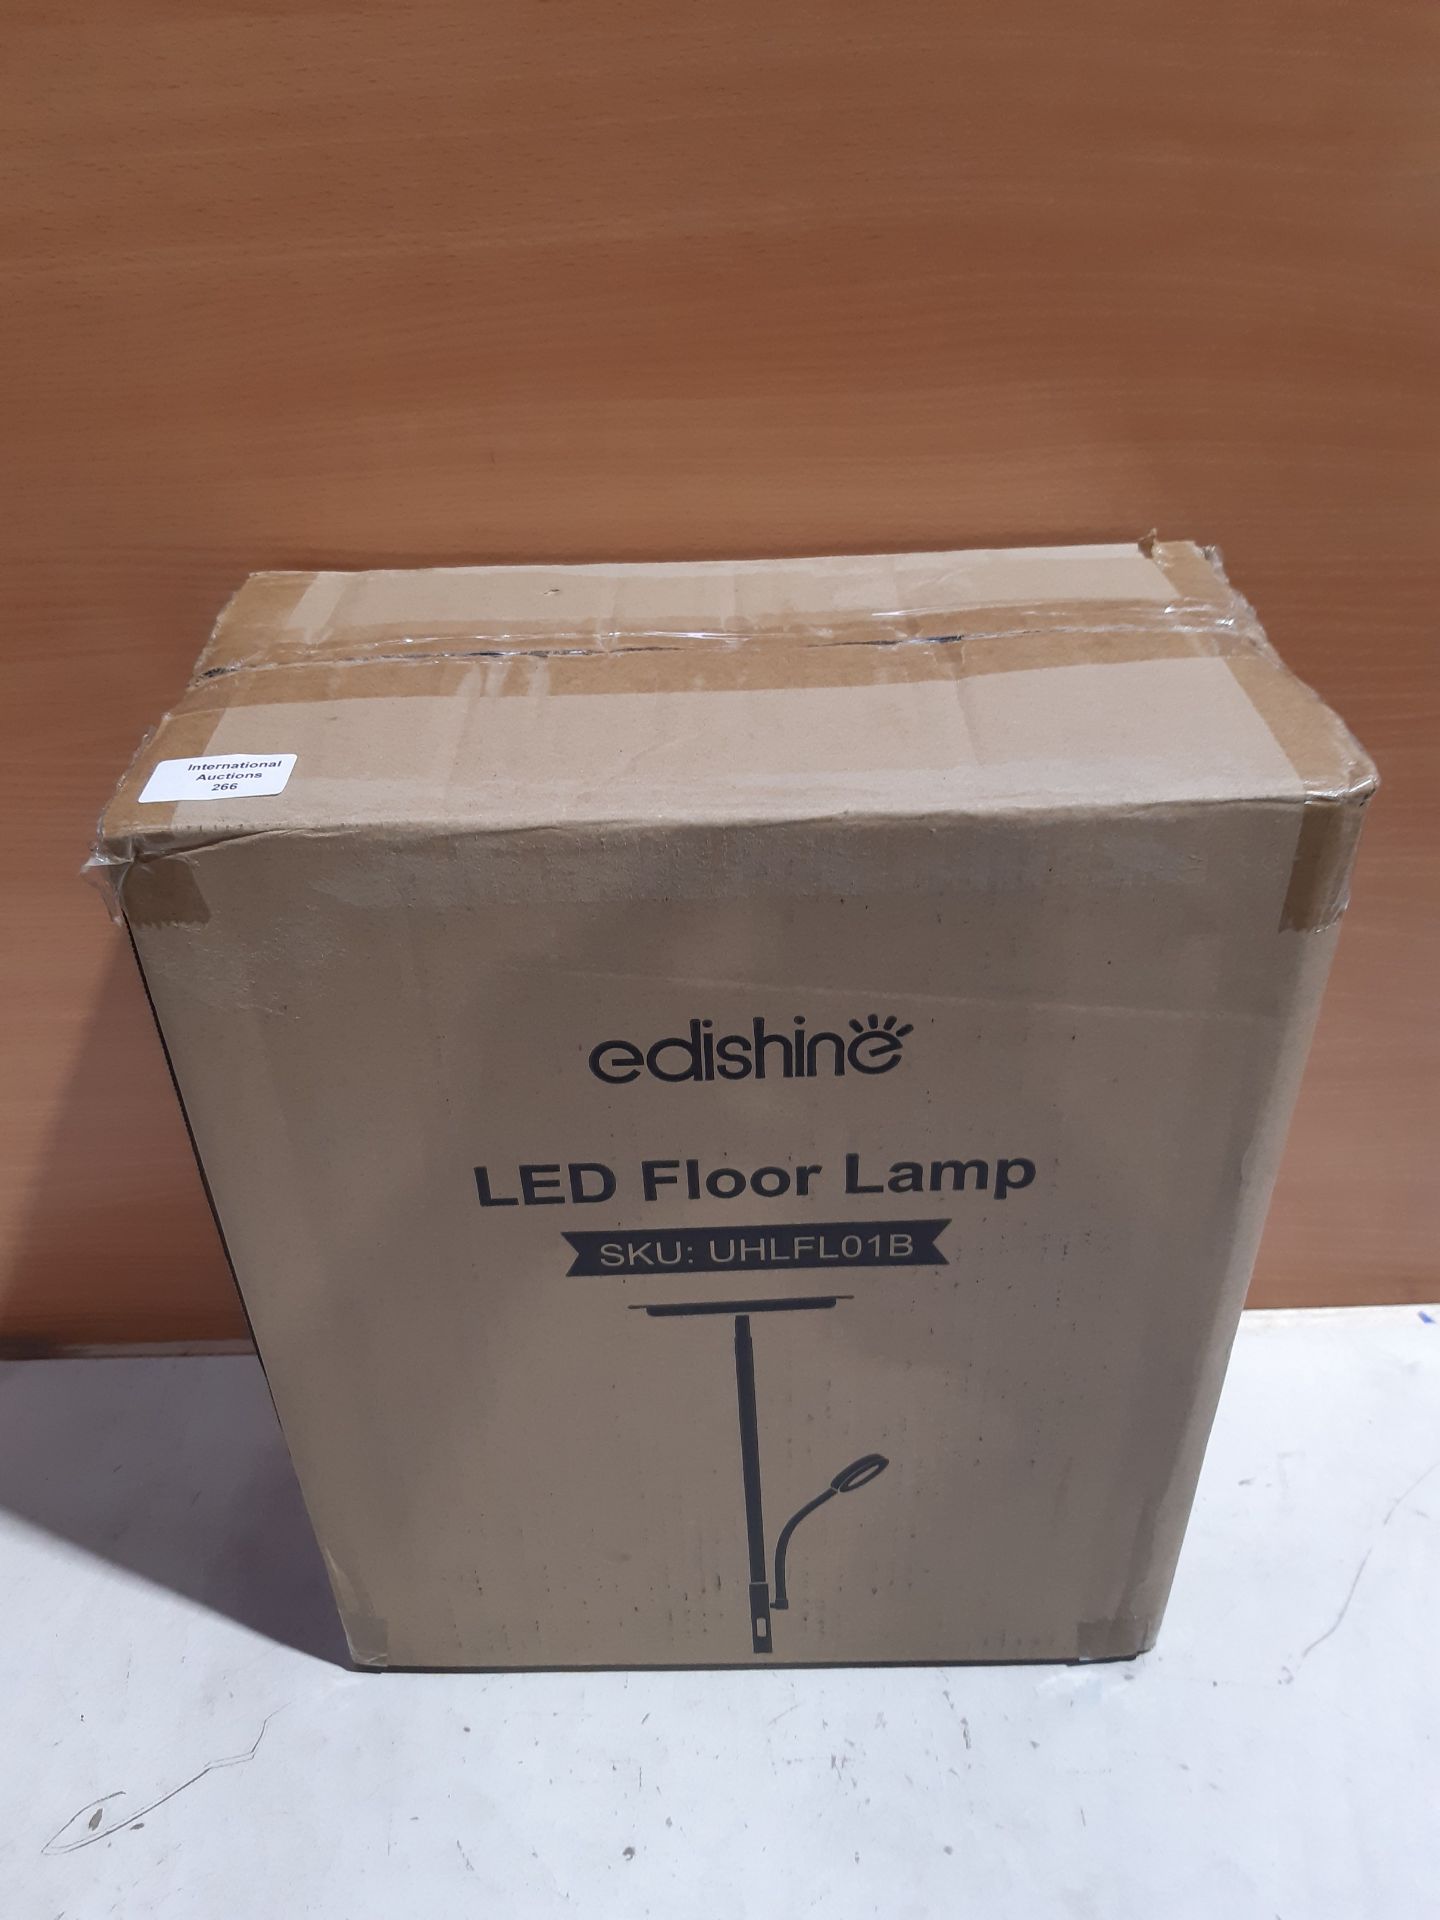 RRP £64.99 EDISHINE Uplighter Floor Lamp - Image 2 of 2